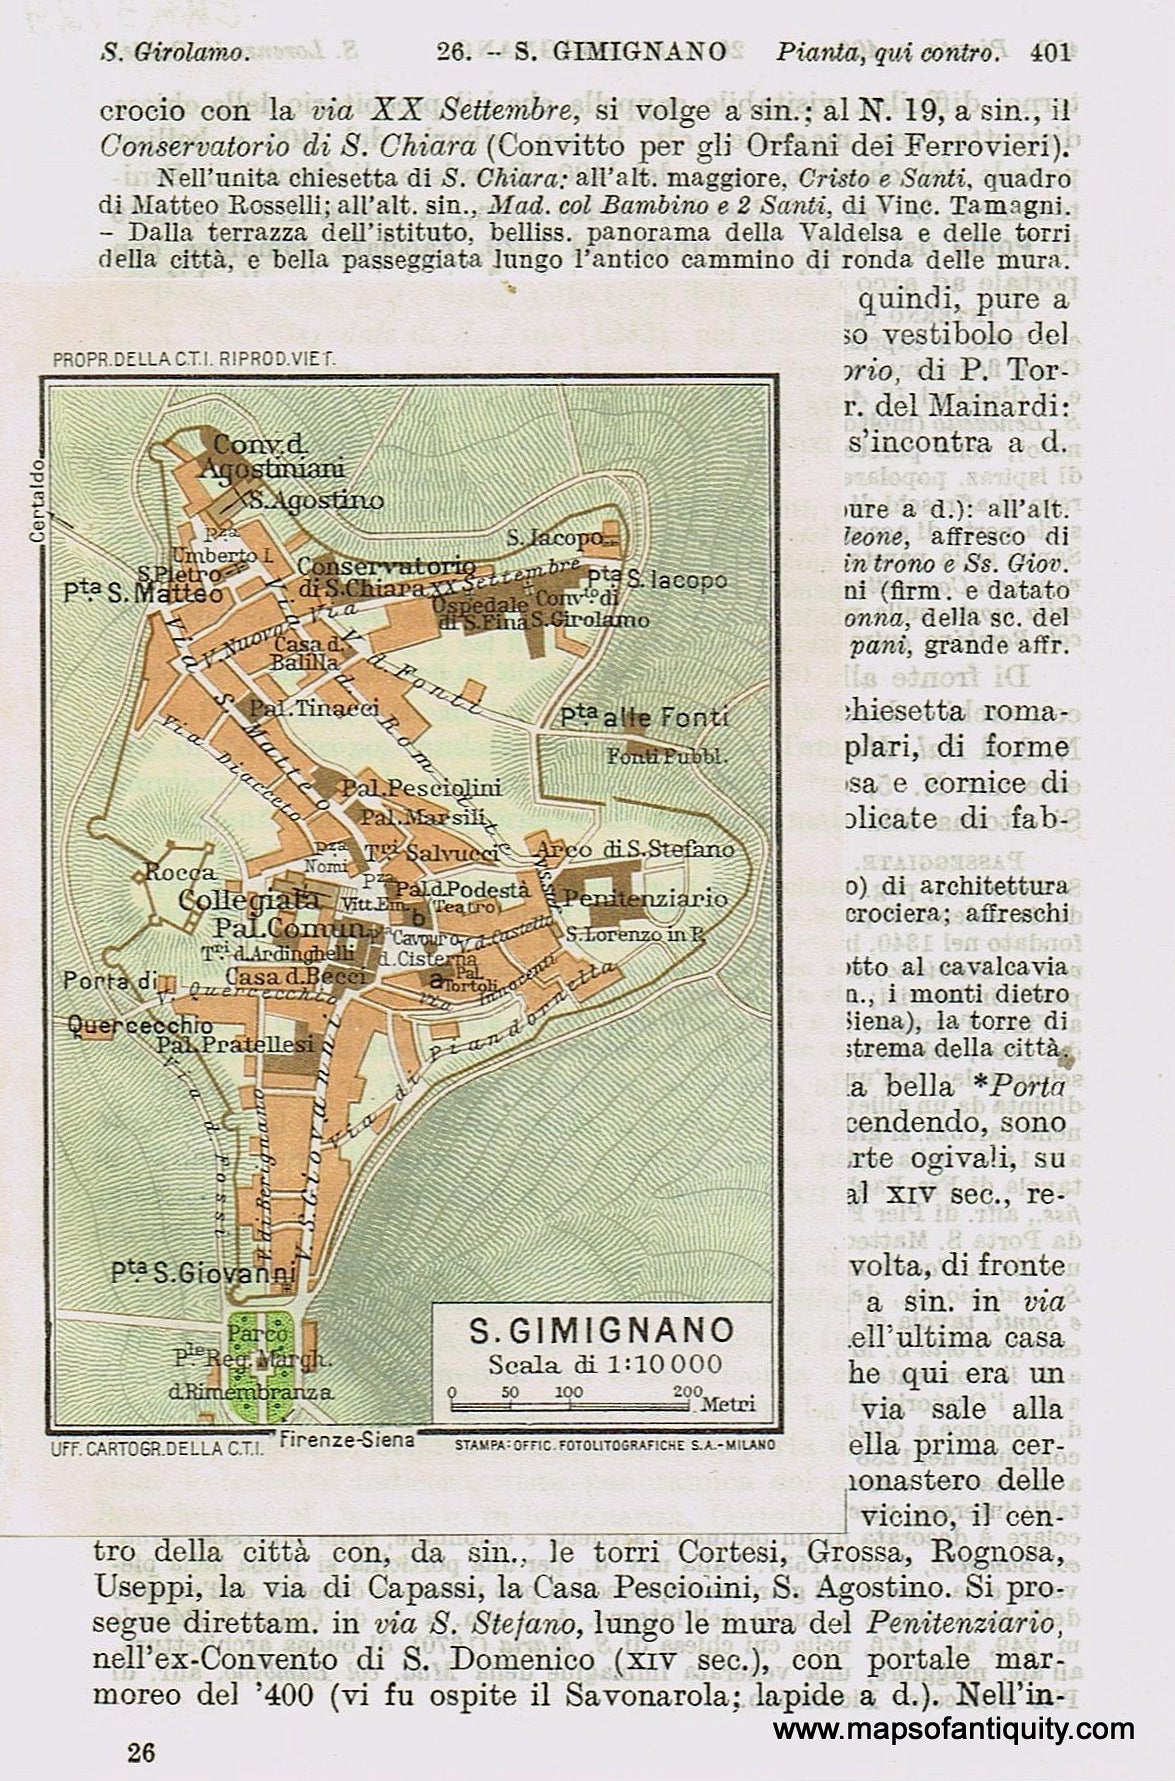 Genuine-Antique-Map--San-Gimignano-Italy-1935-Guida-D-italia--Maps-Of-Antiquity